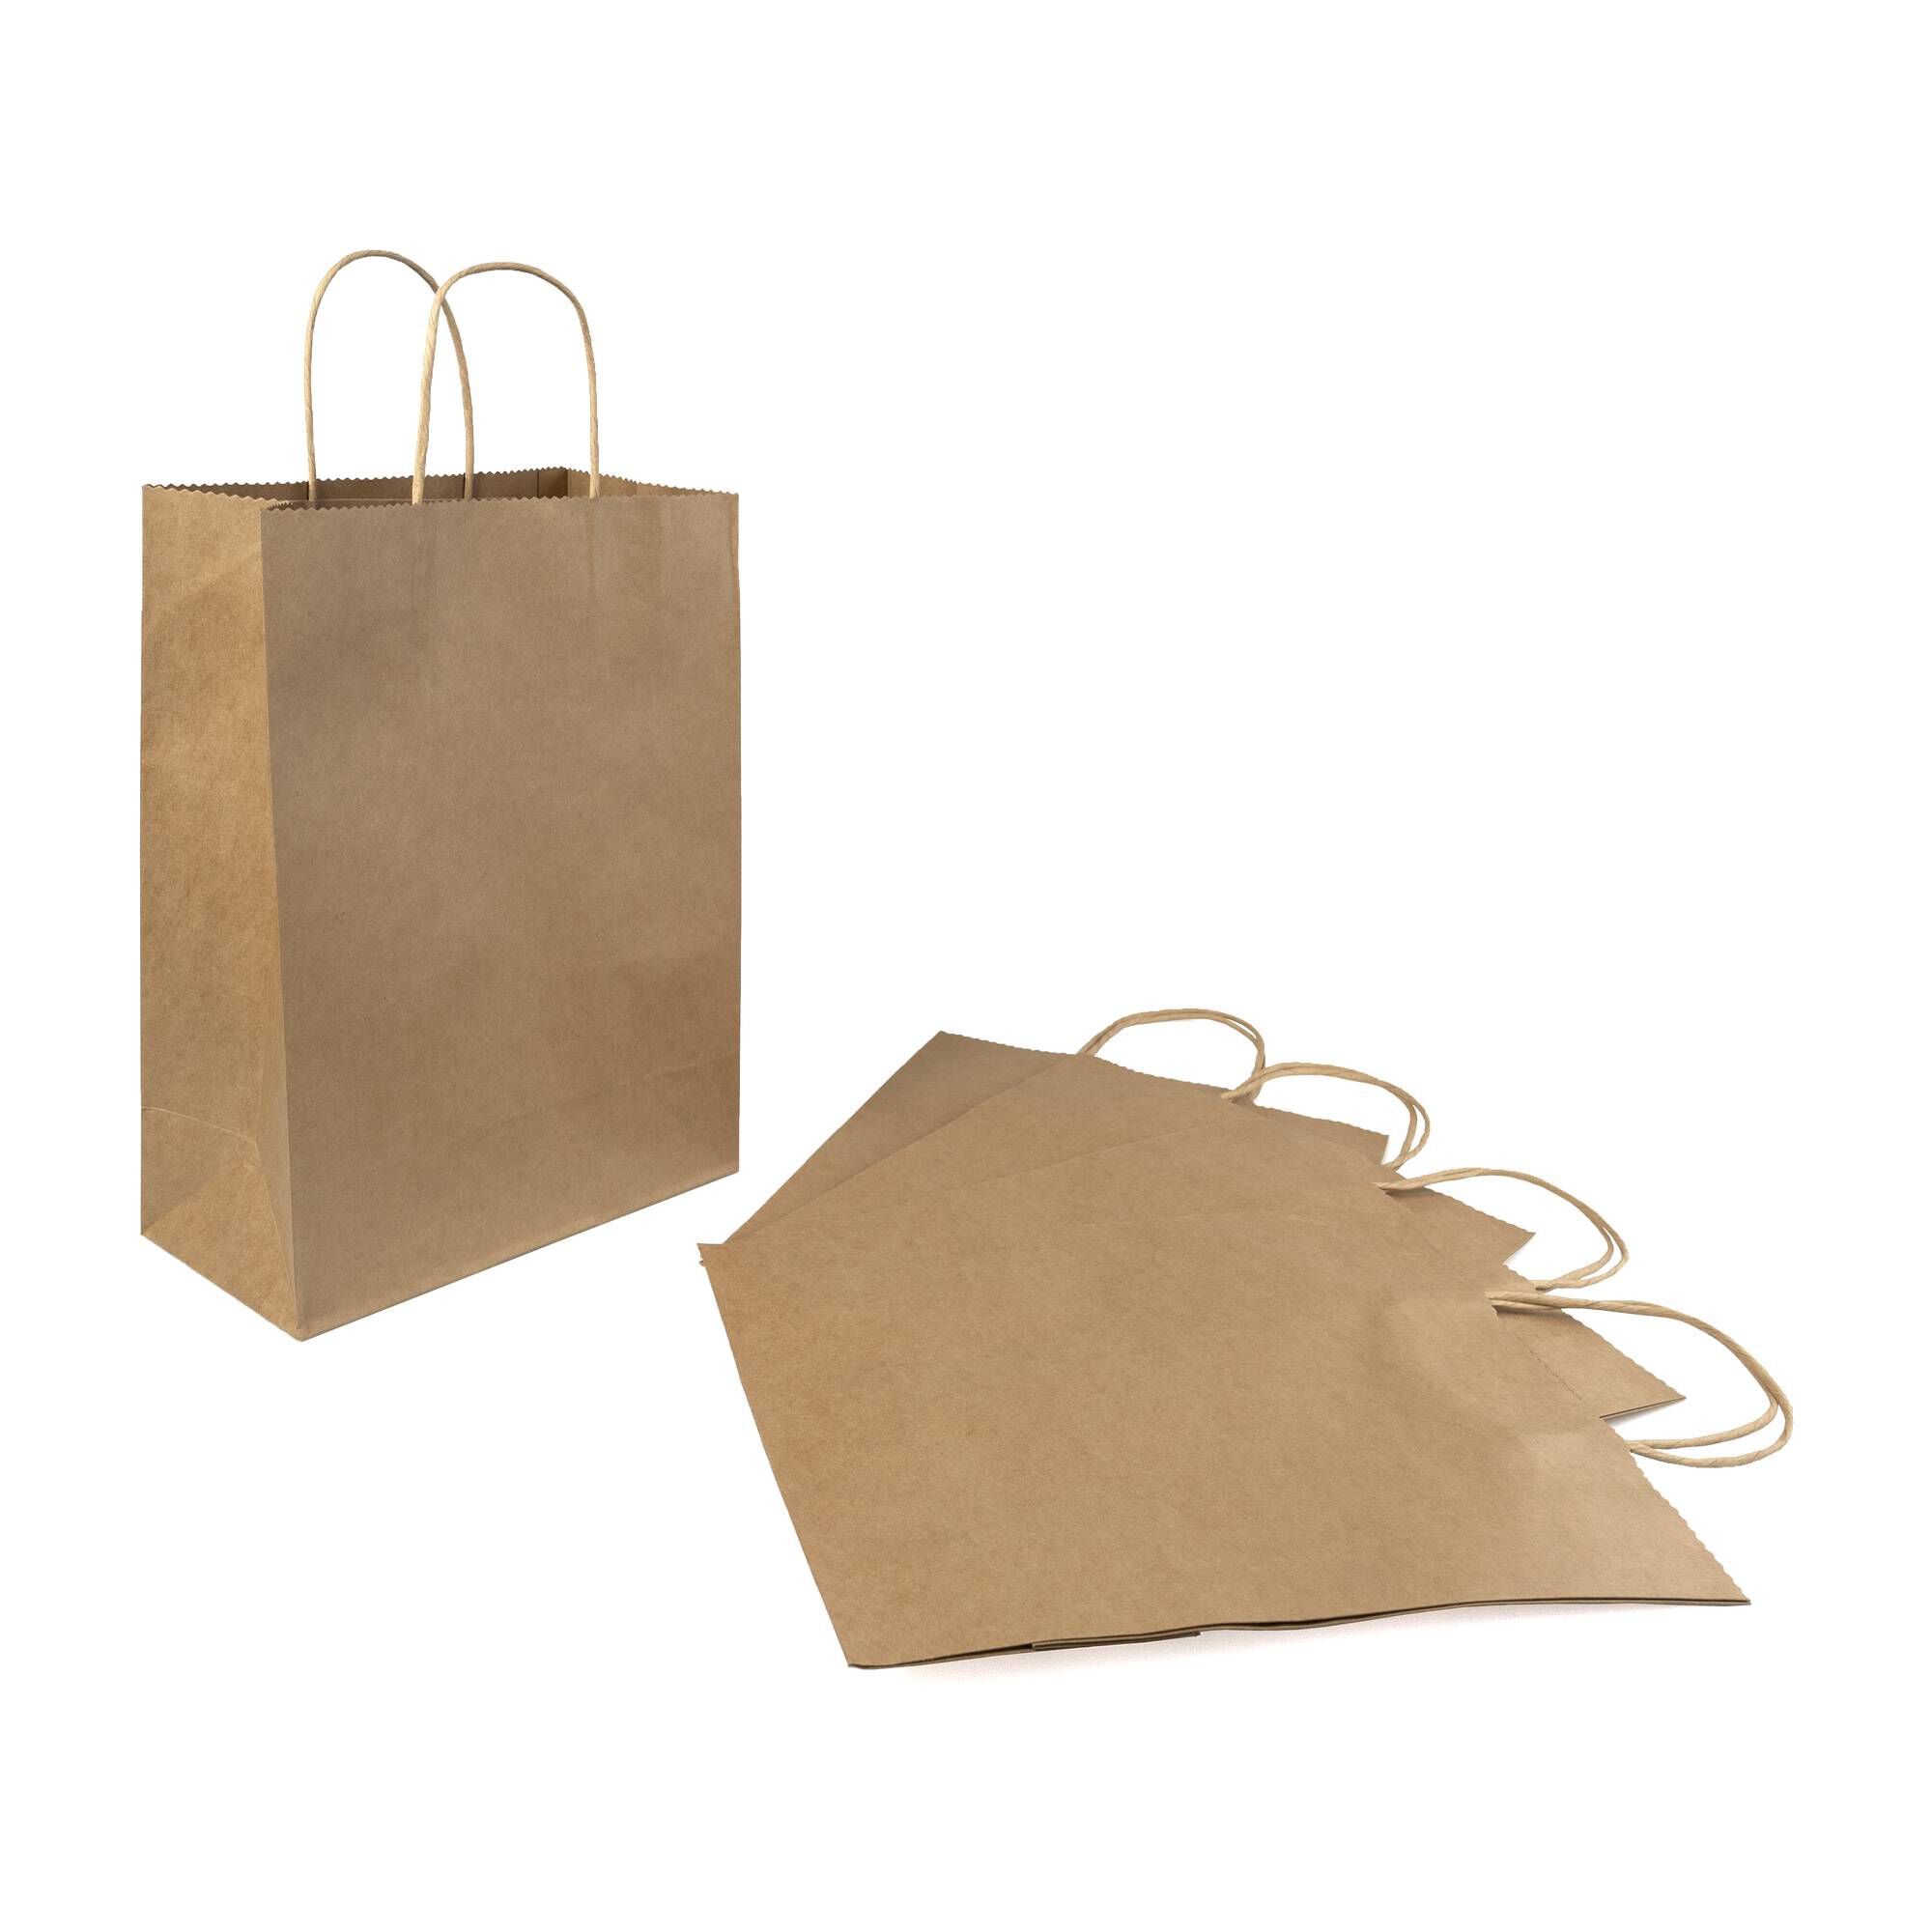 Buy DP Paper Gift Bags - Assorted Design, Big Online at Best Price of Rs  129 - bigbasket